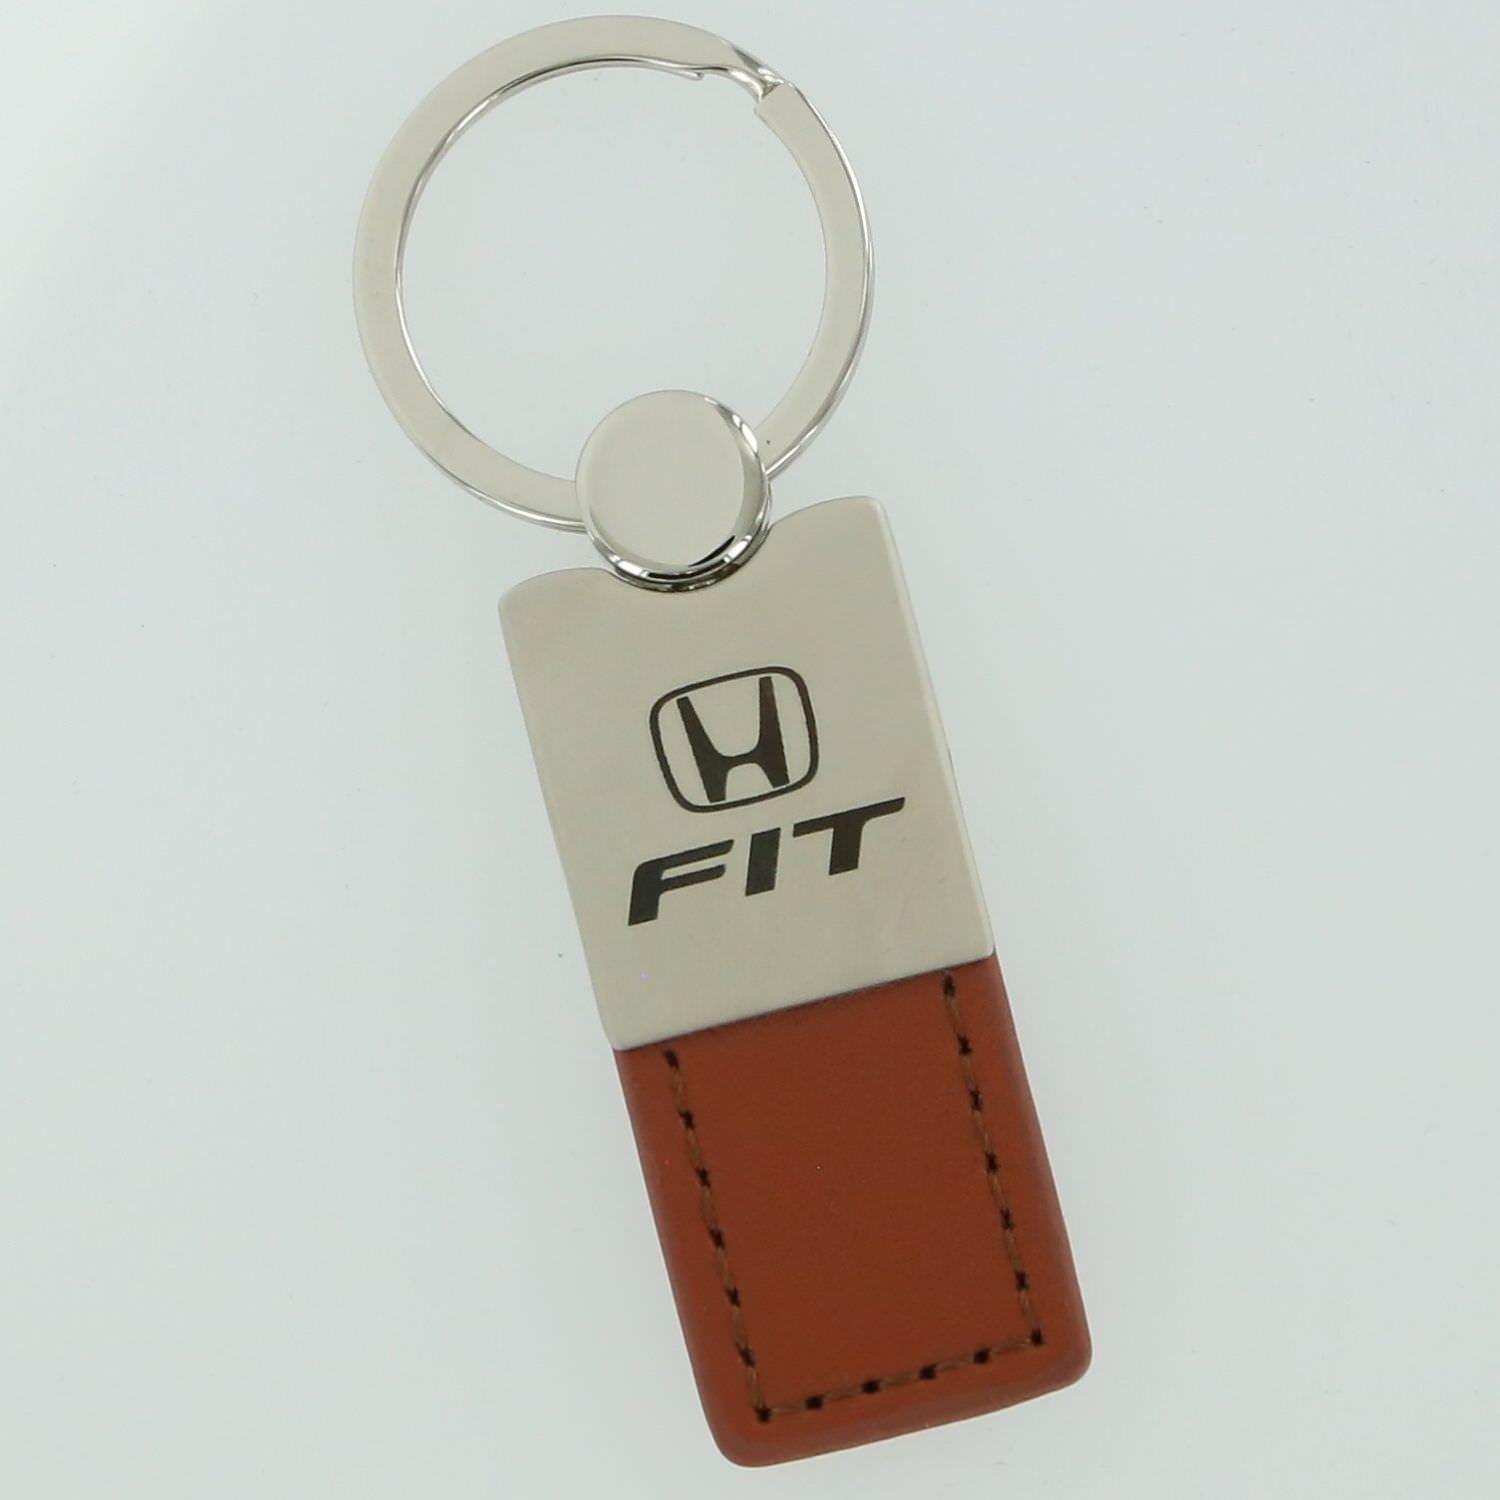 Honda Fit Key Chain